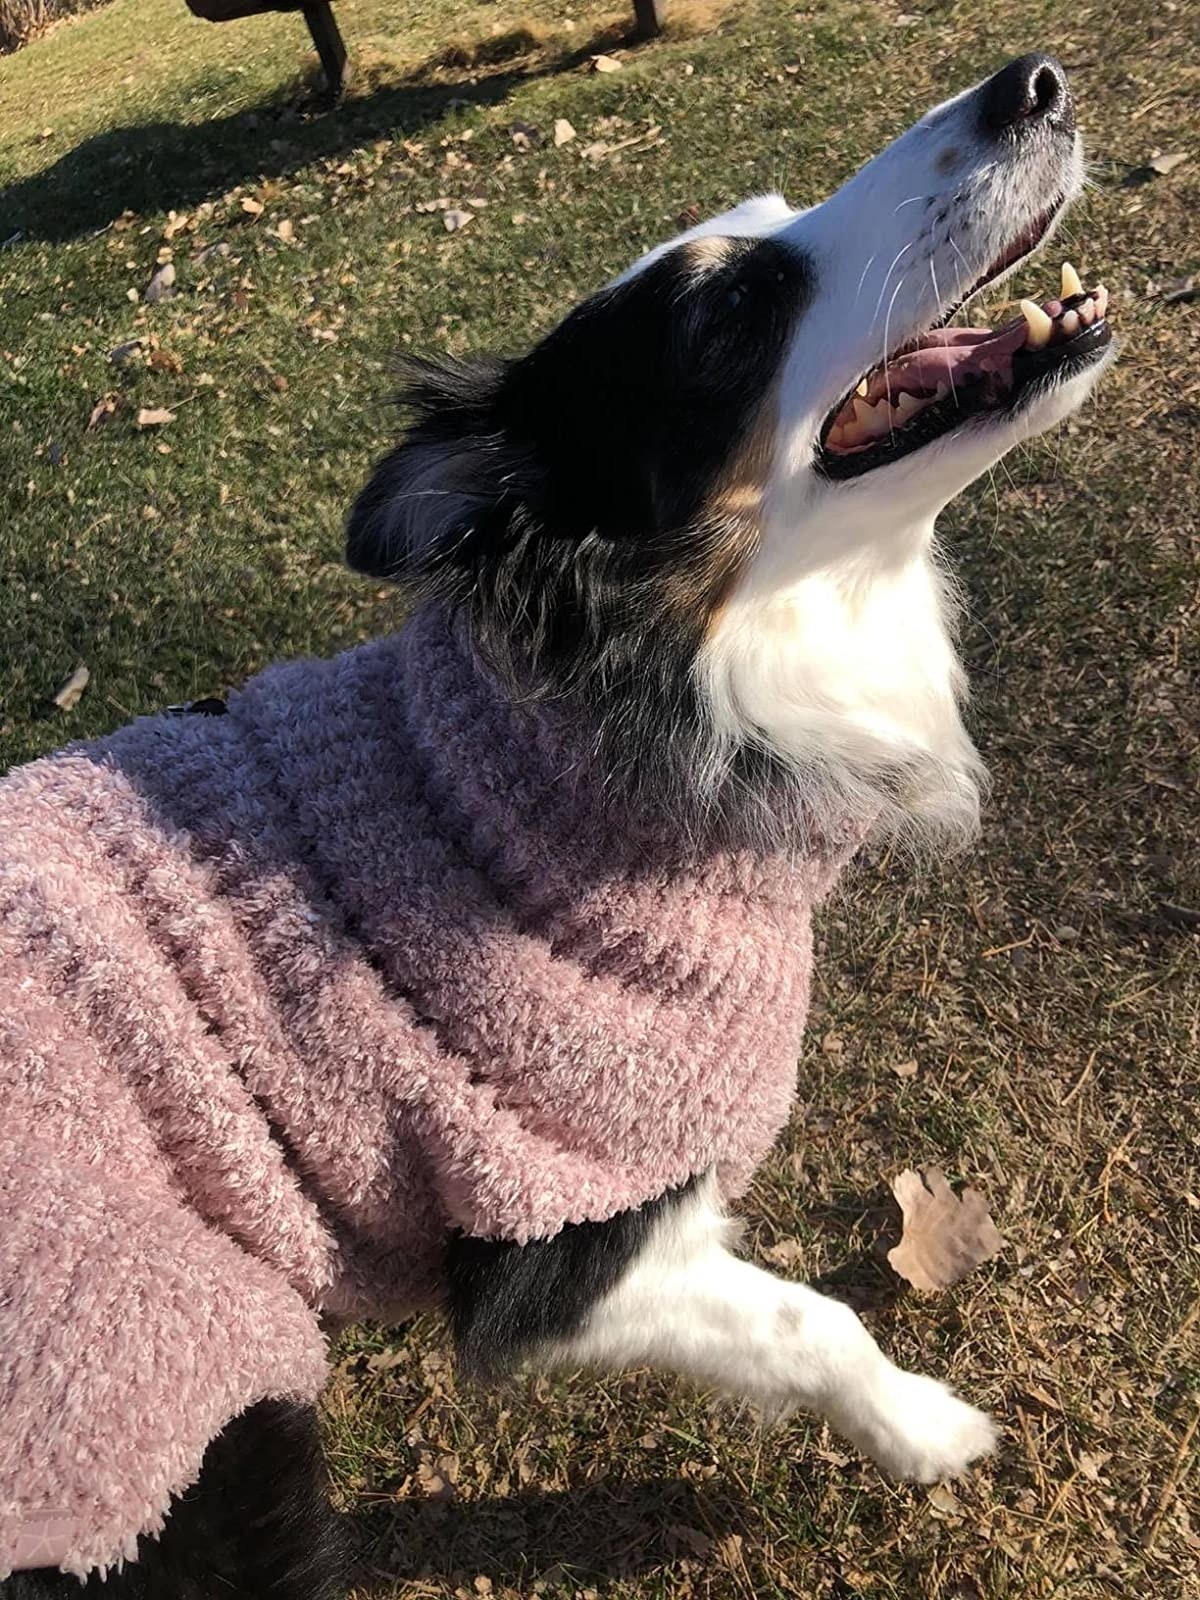 A dog enjoys its pink sweater